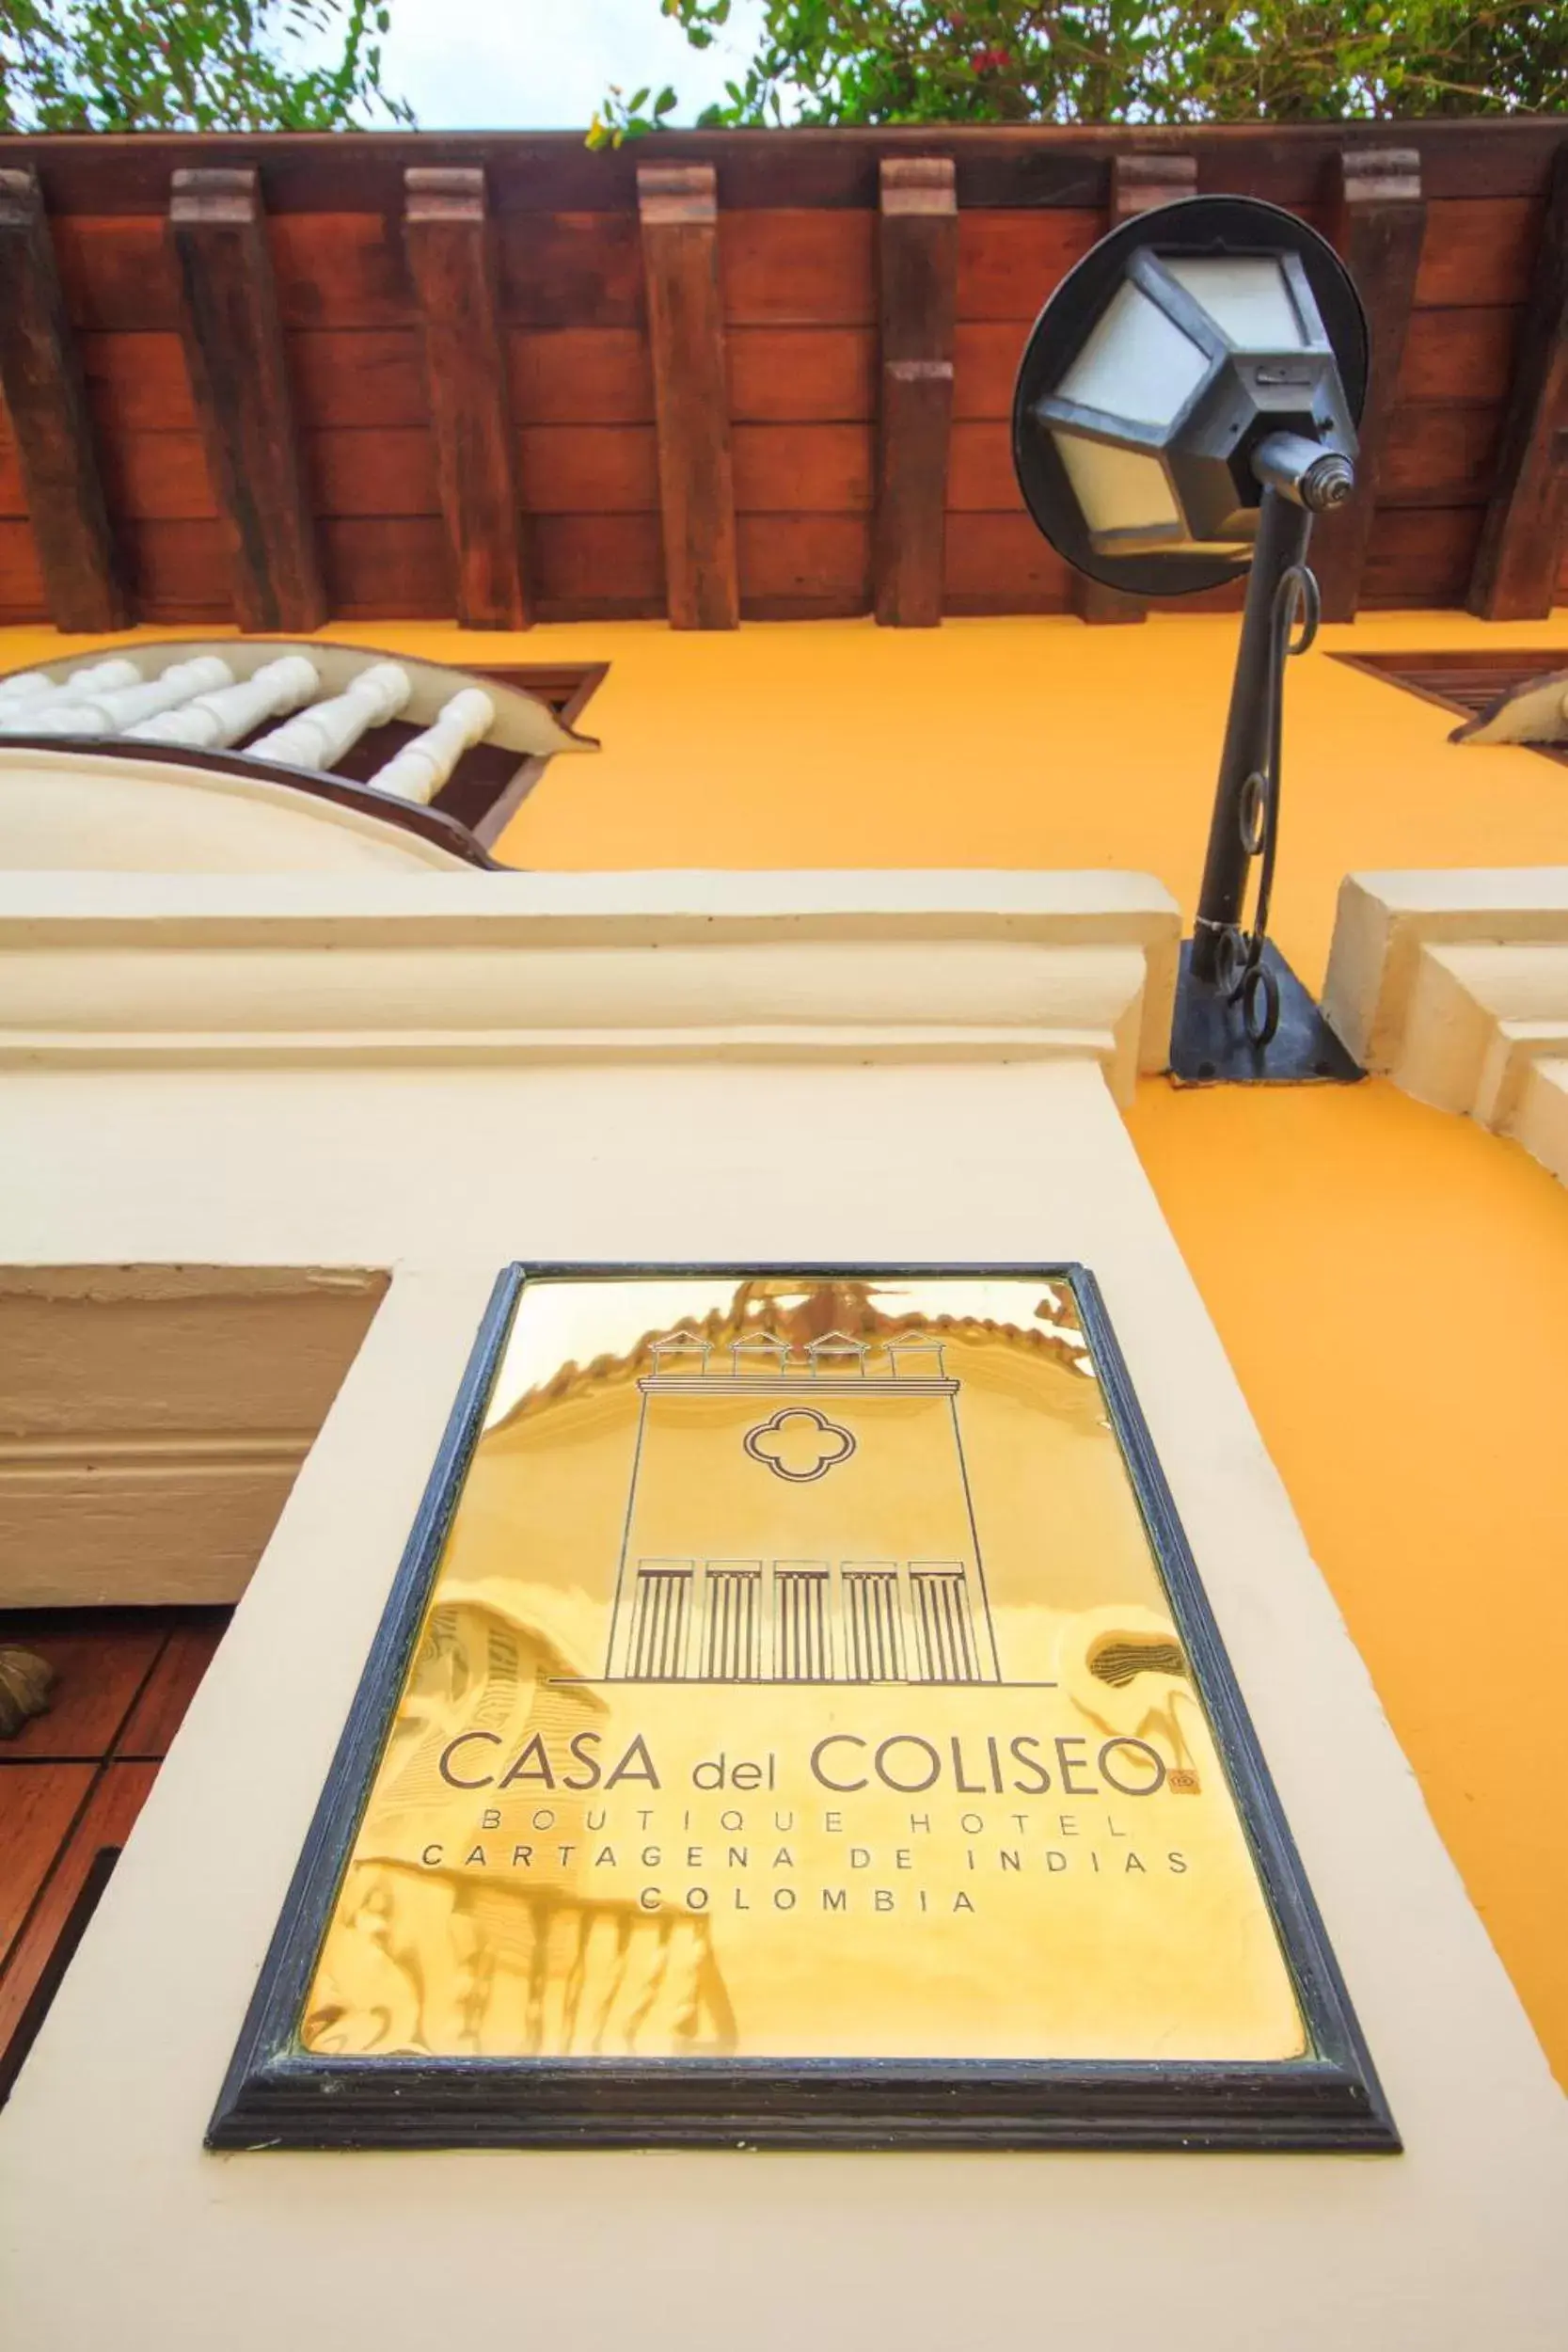 Property logo or sign in Hotel Boutique Casa del Coliseo